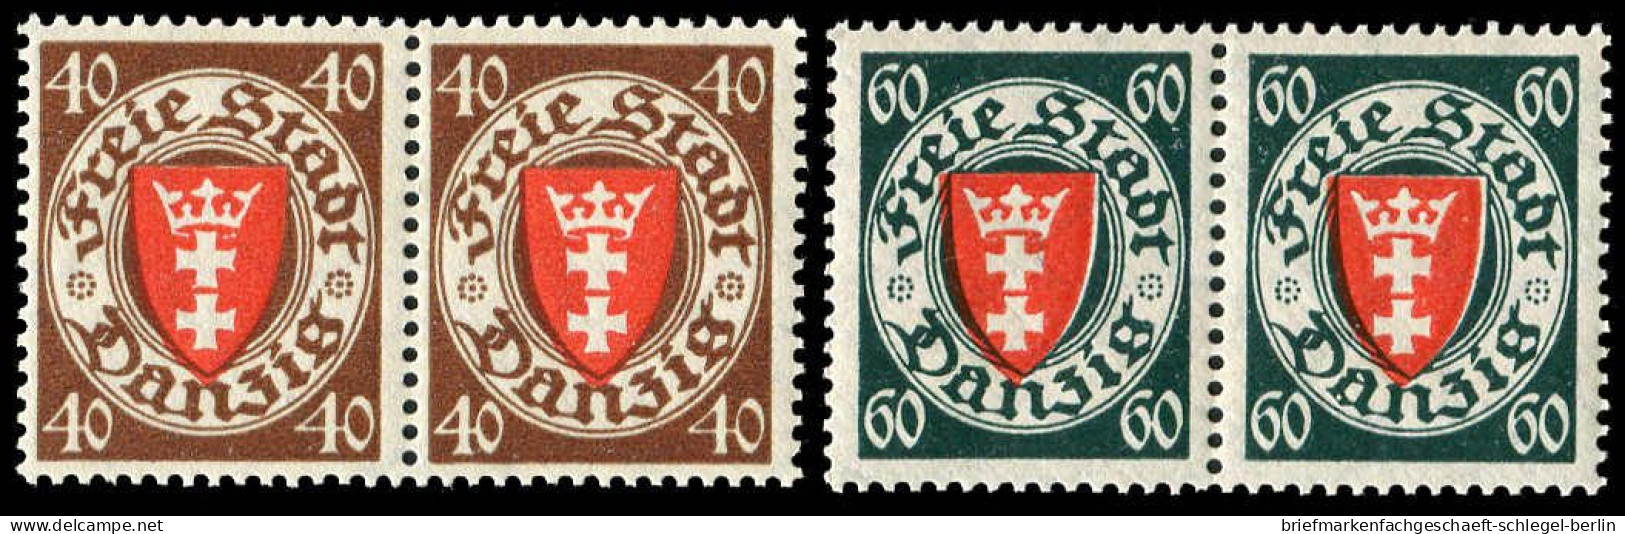 Danzig, 1935, 243-244, Postfrisch - Mint